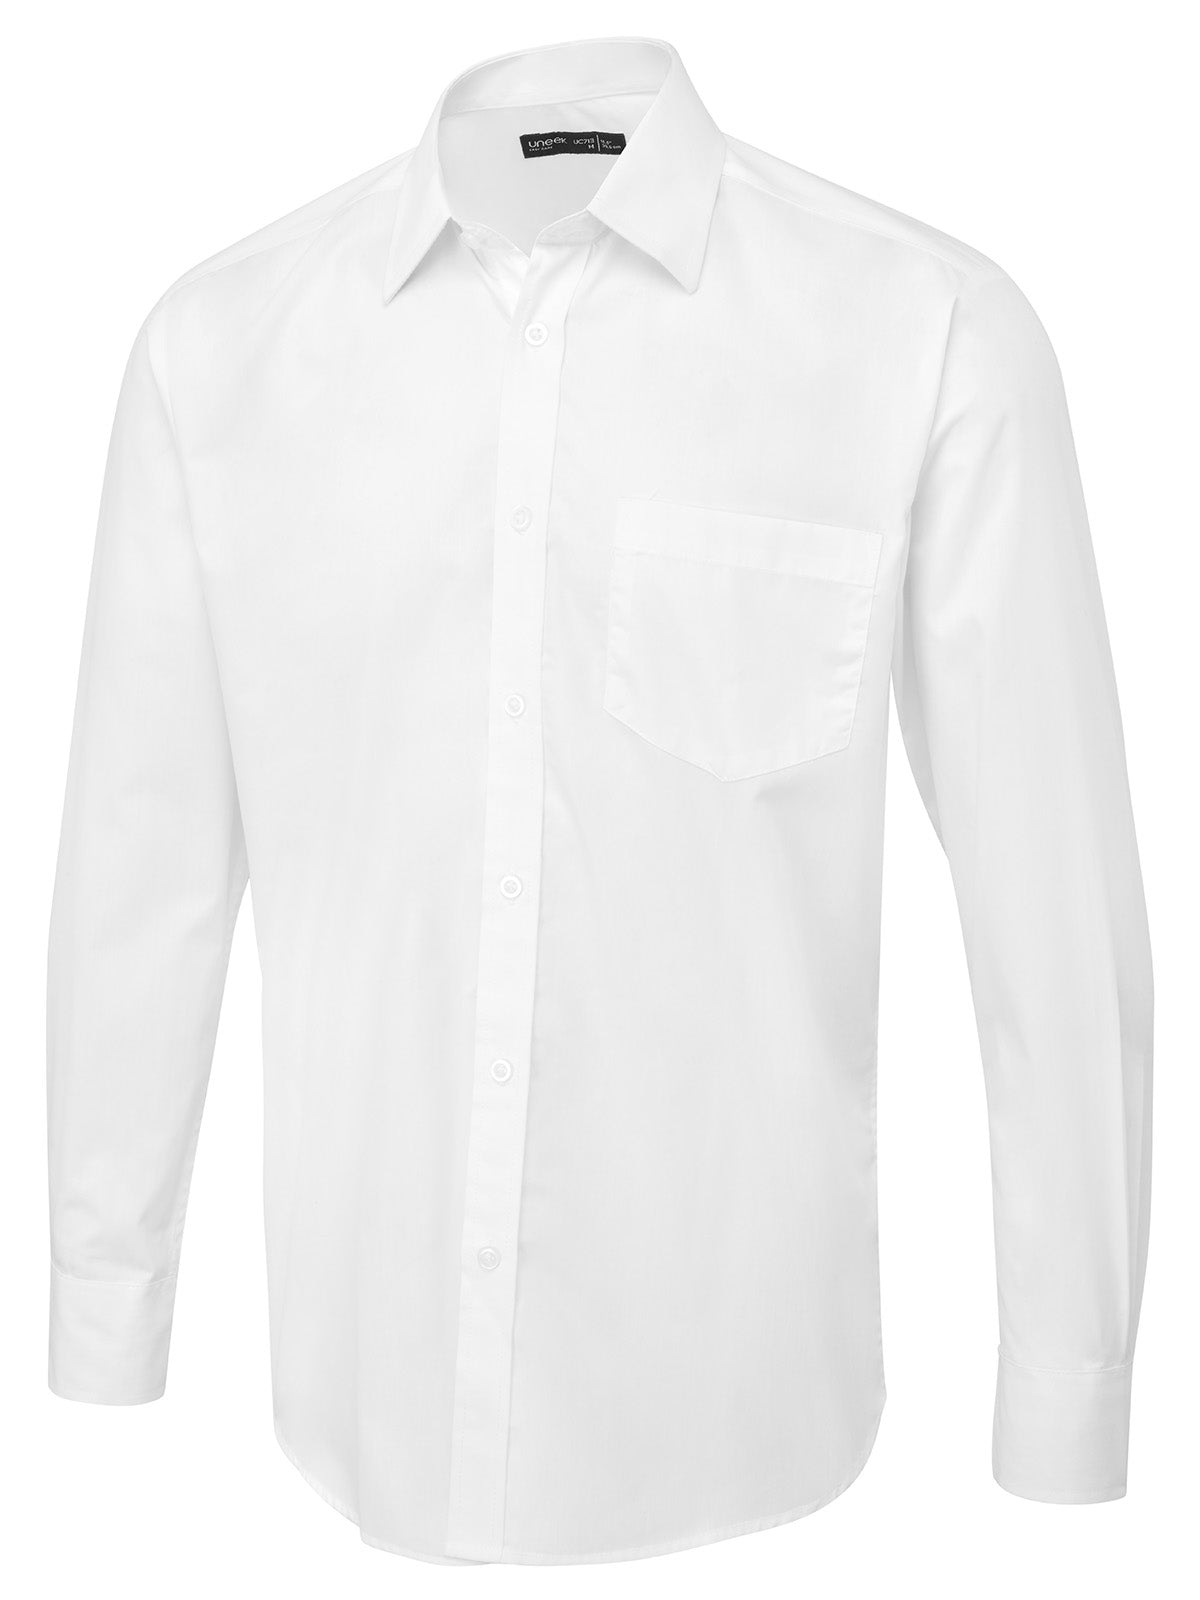 Uneek Men's Short Sleeve Poplin Shirt UC714 - White